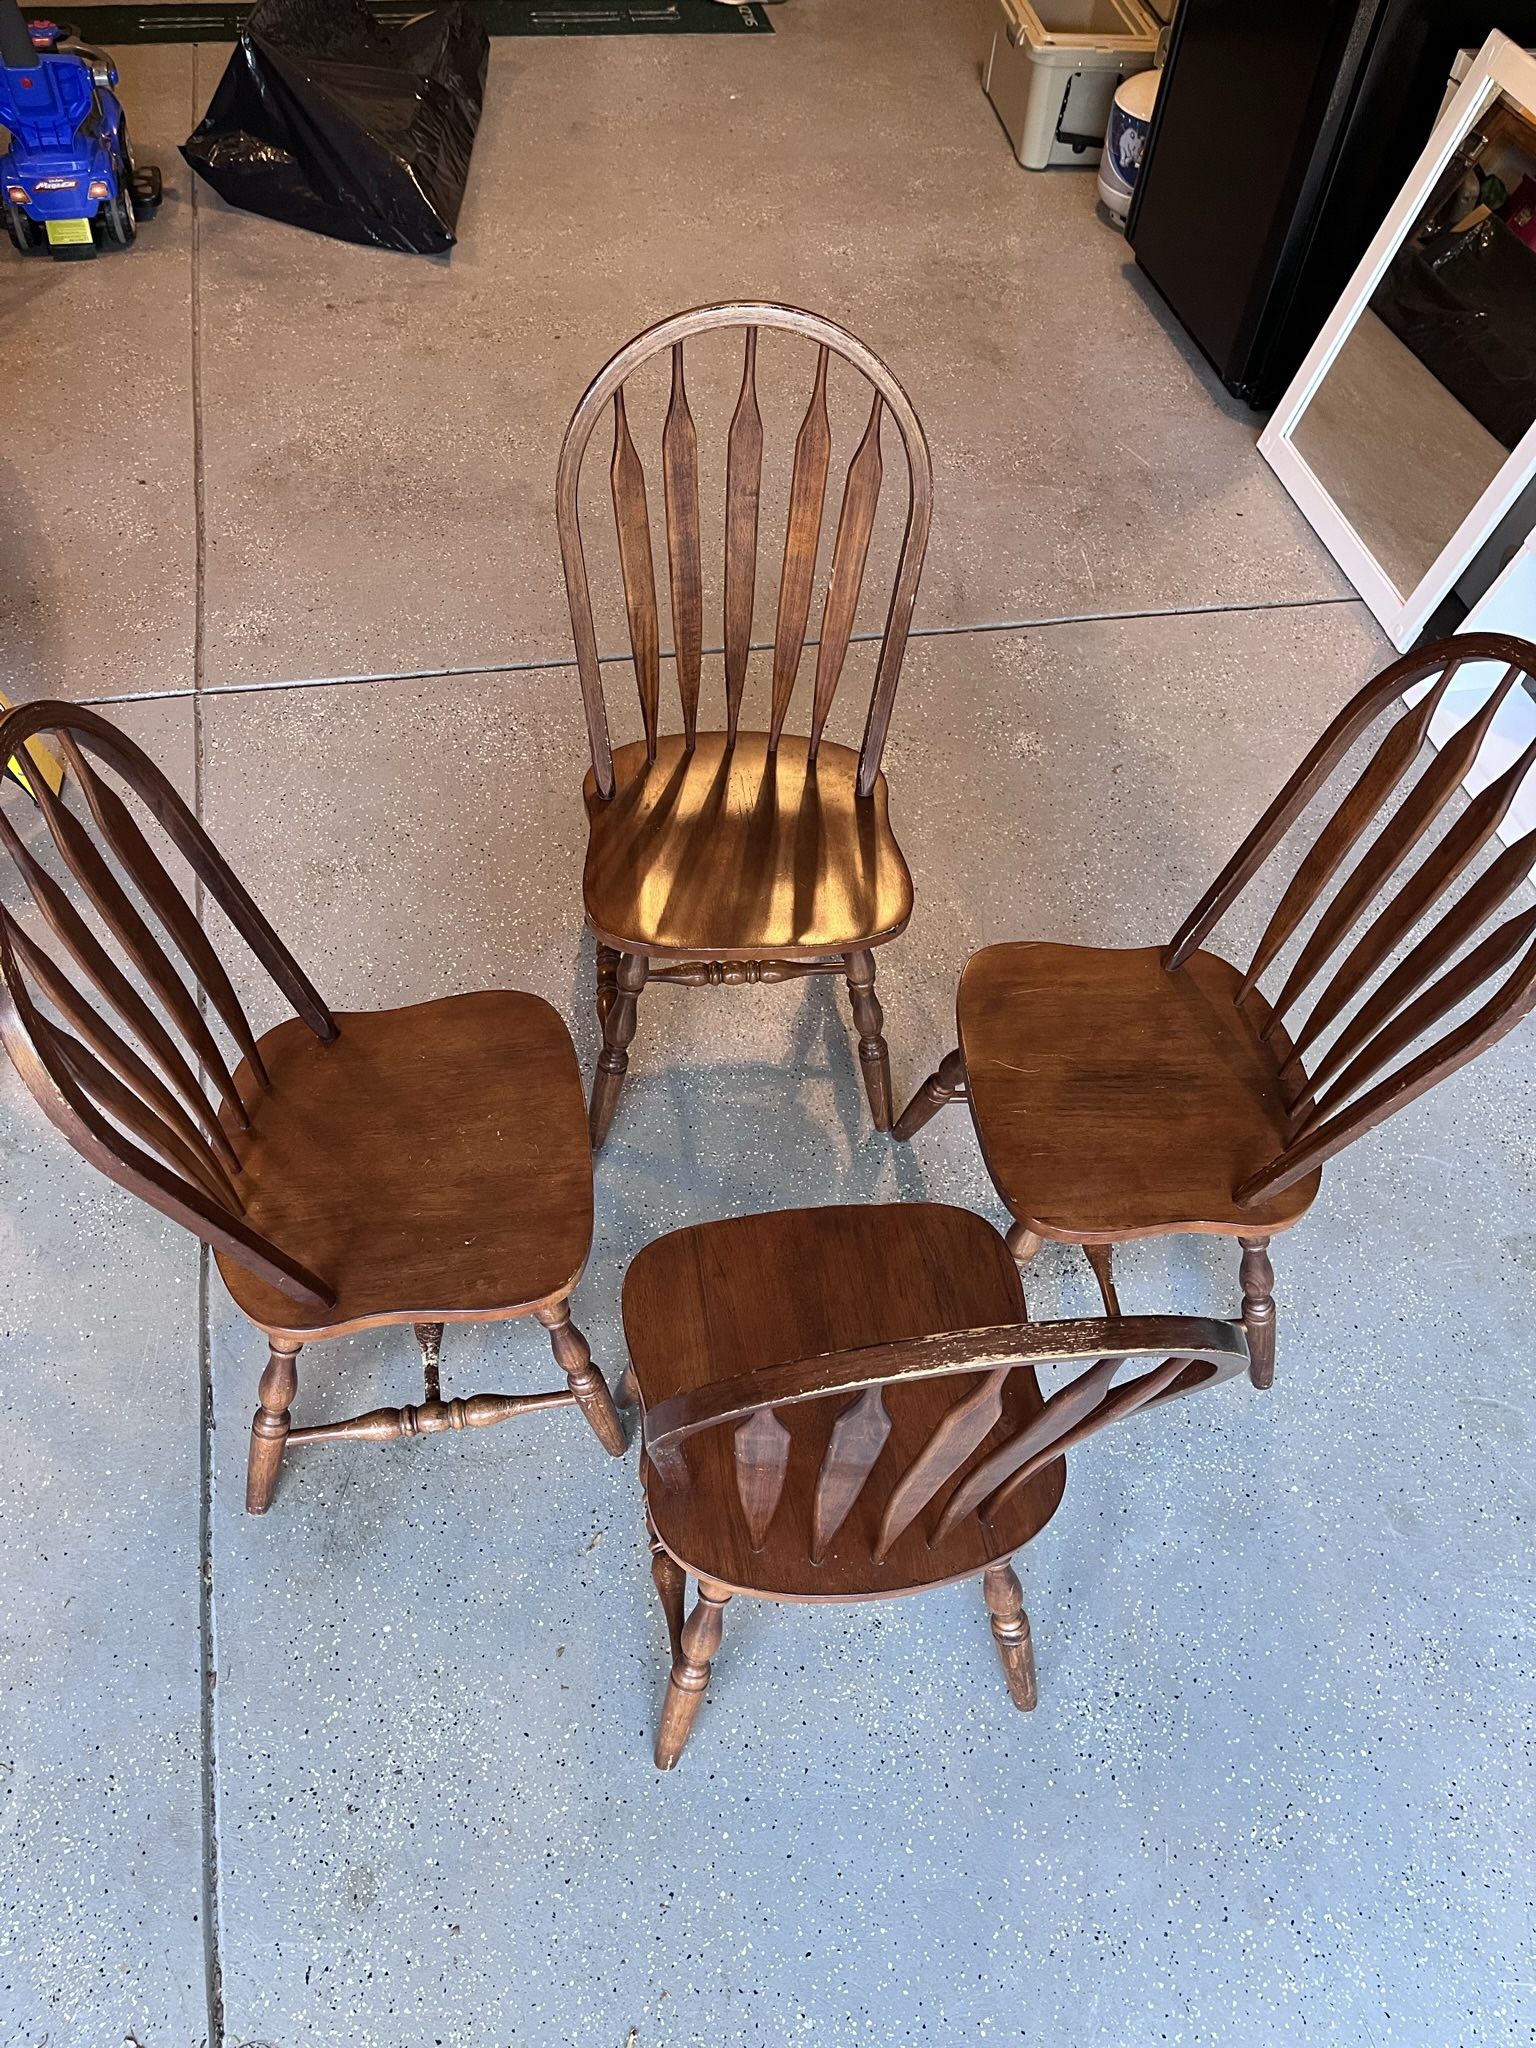 Wood Kitchen Chairs